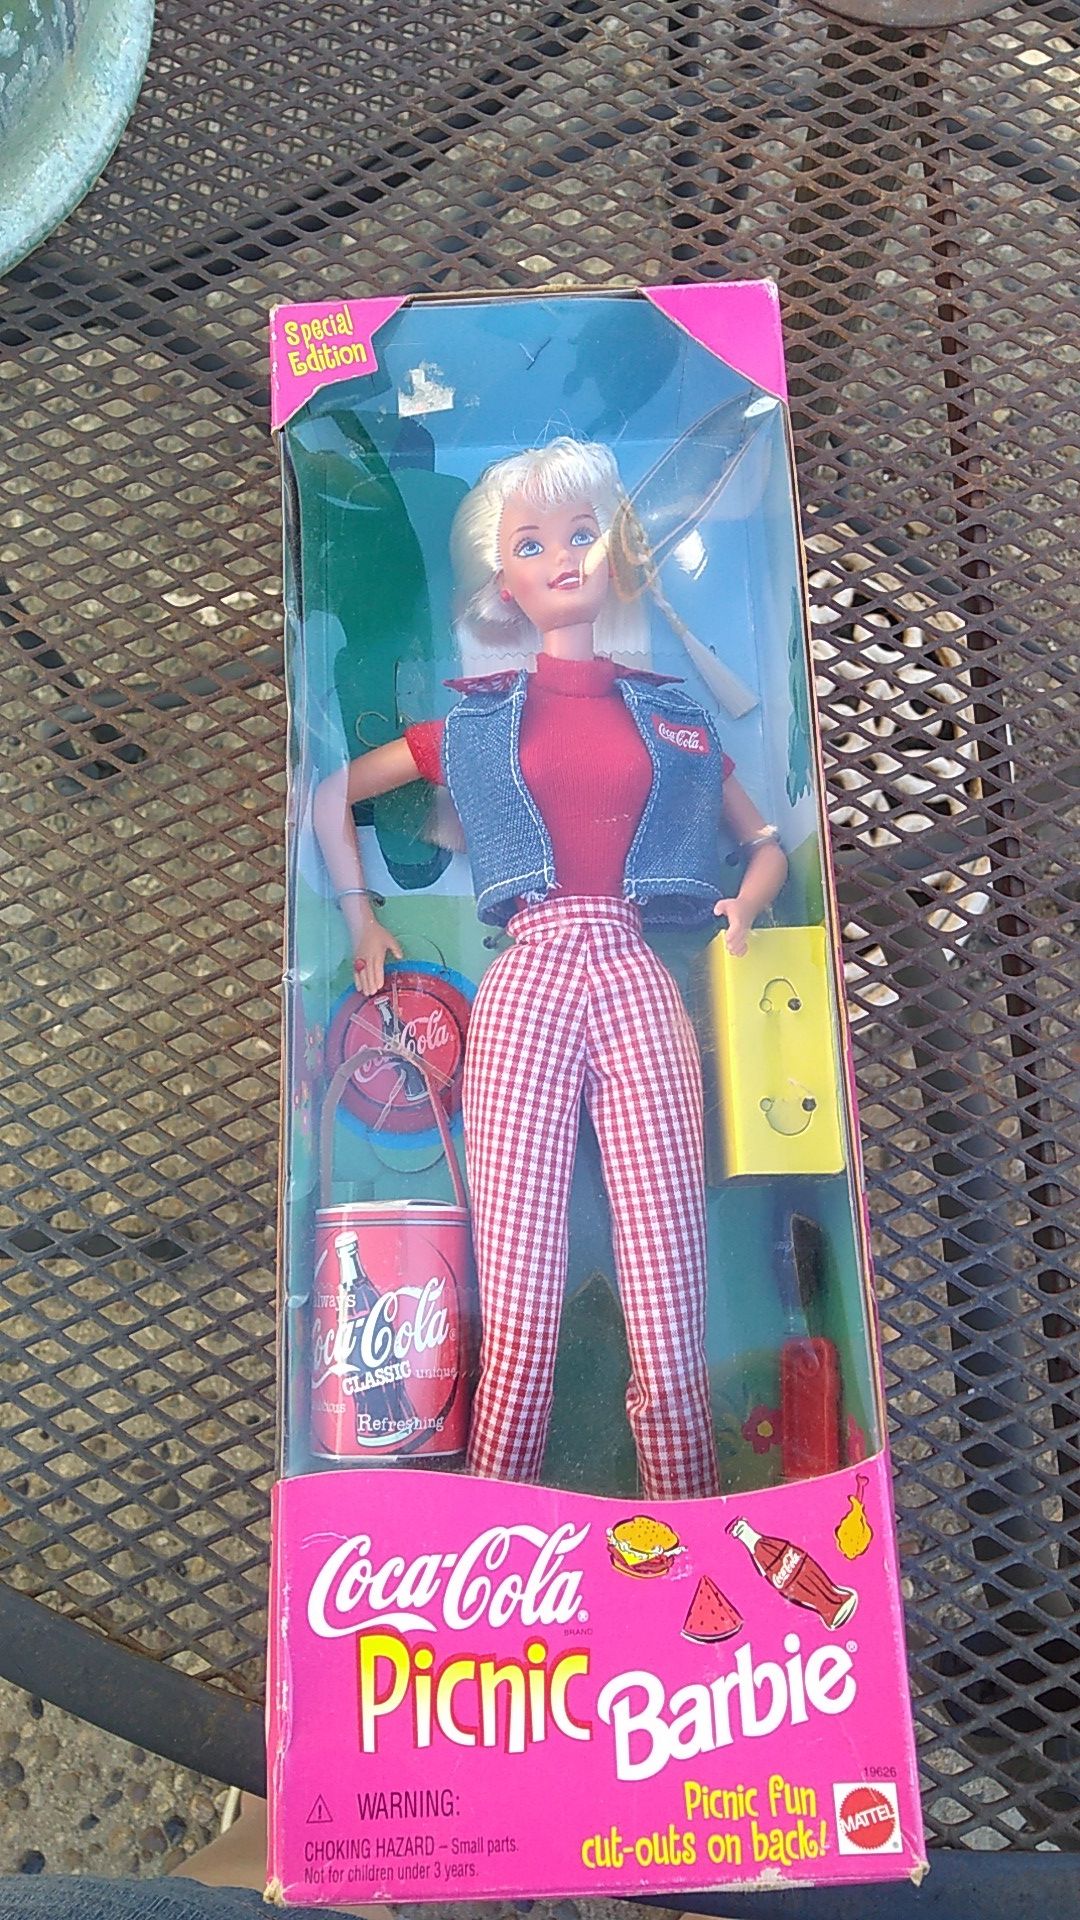 Coca cola picnic barbie